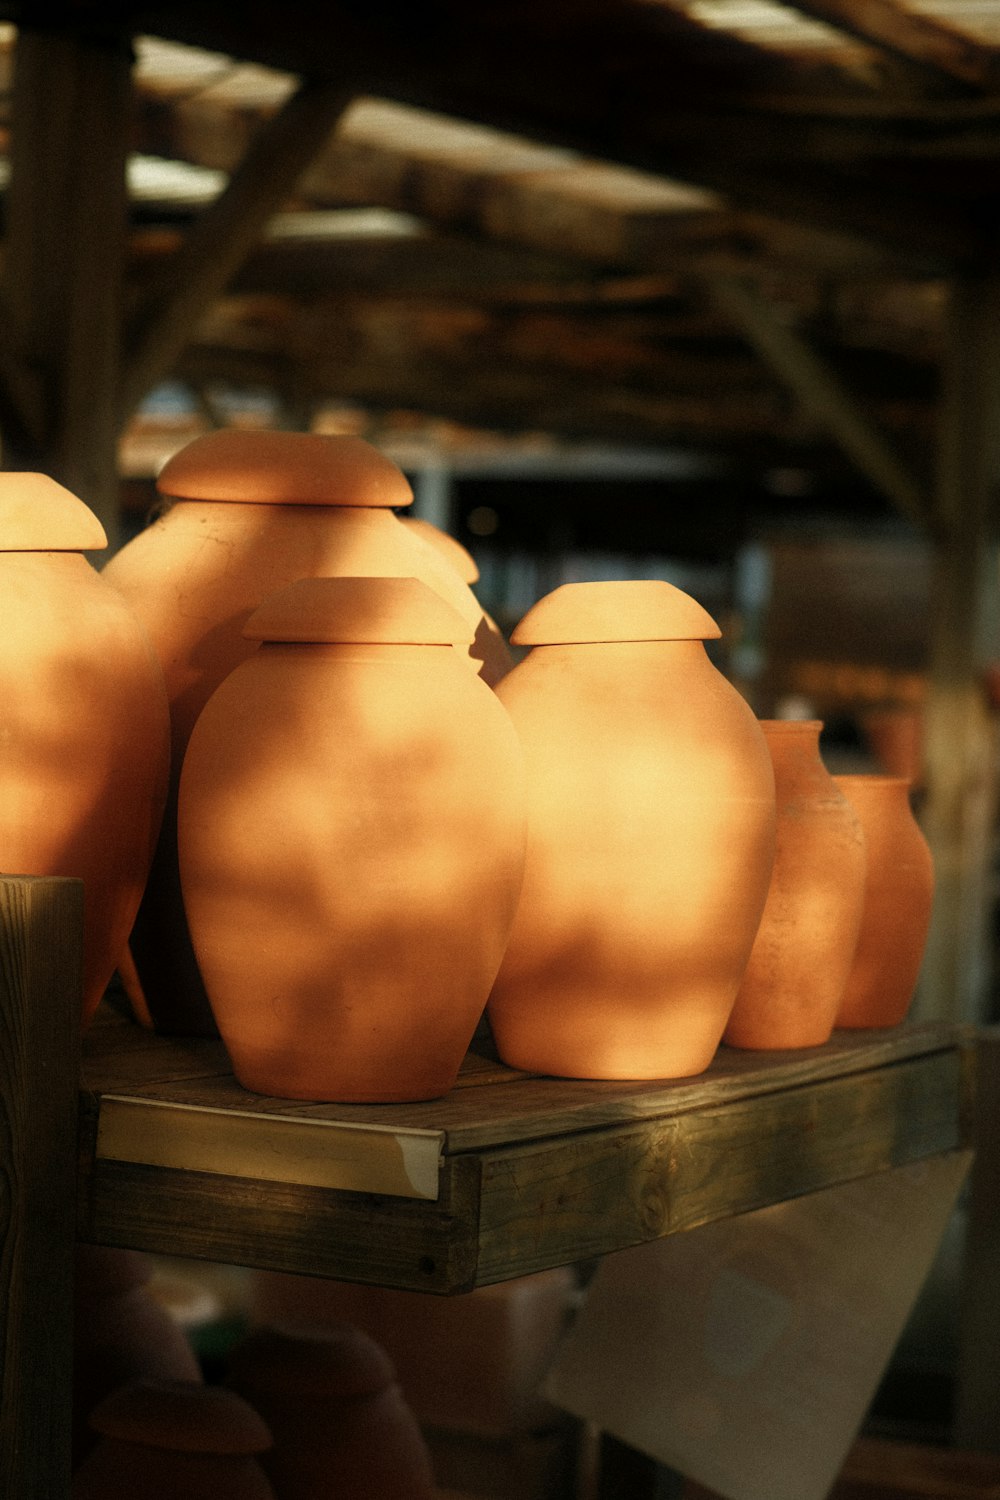 un gruppo di vasi di terracotta seduti sopra una mensola di legno